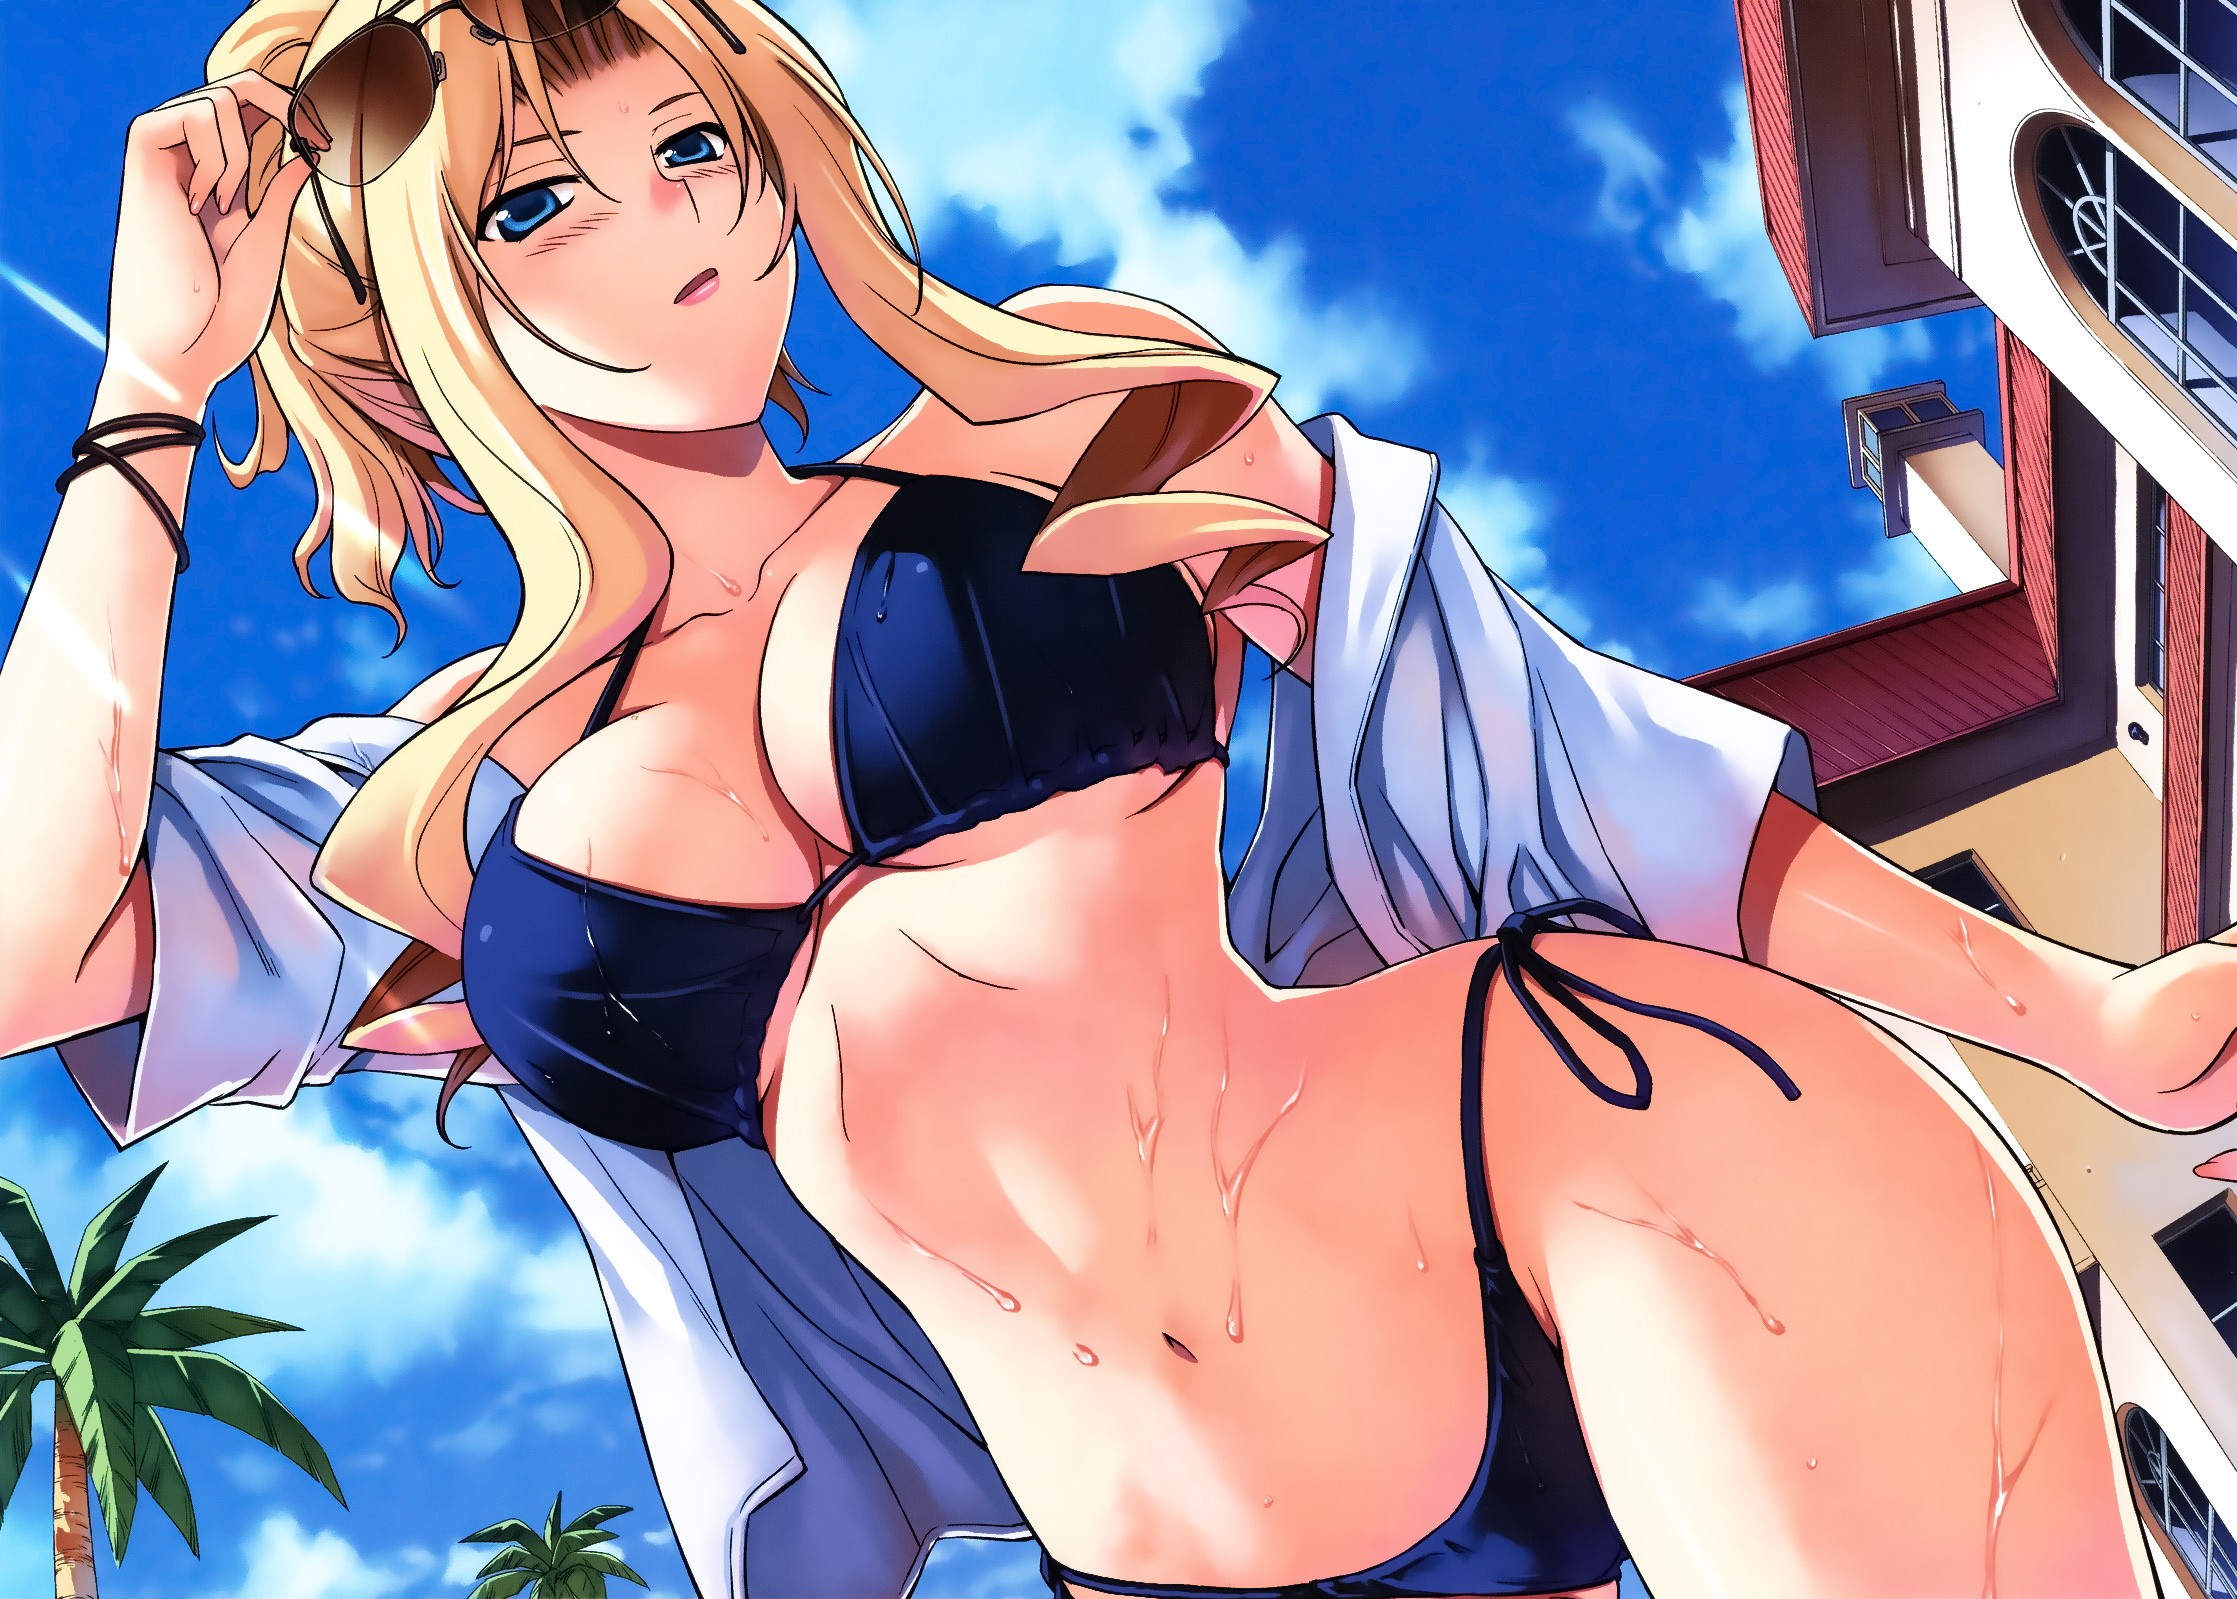 Anime 2237x1599 Freezing anime anime girls bikini blonde long hair blue eyes sky clouds sweat big boobs boobs belly women with shades sunglasses wet body